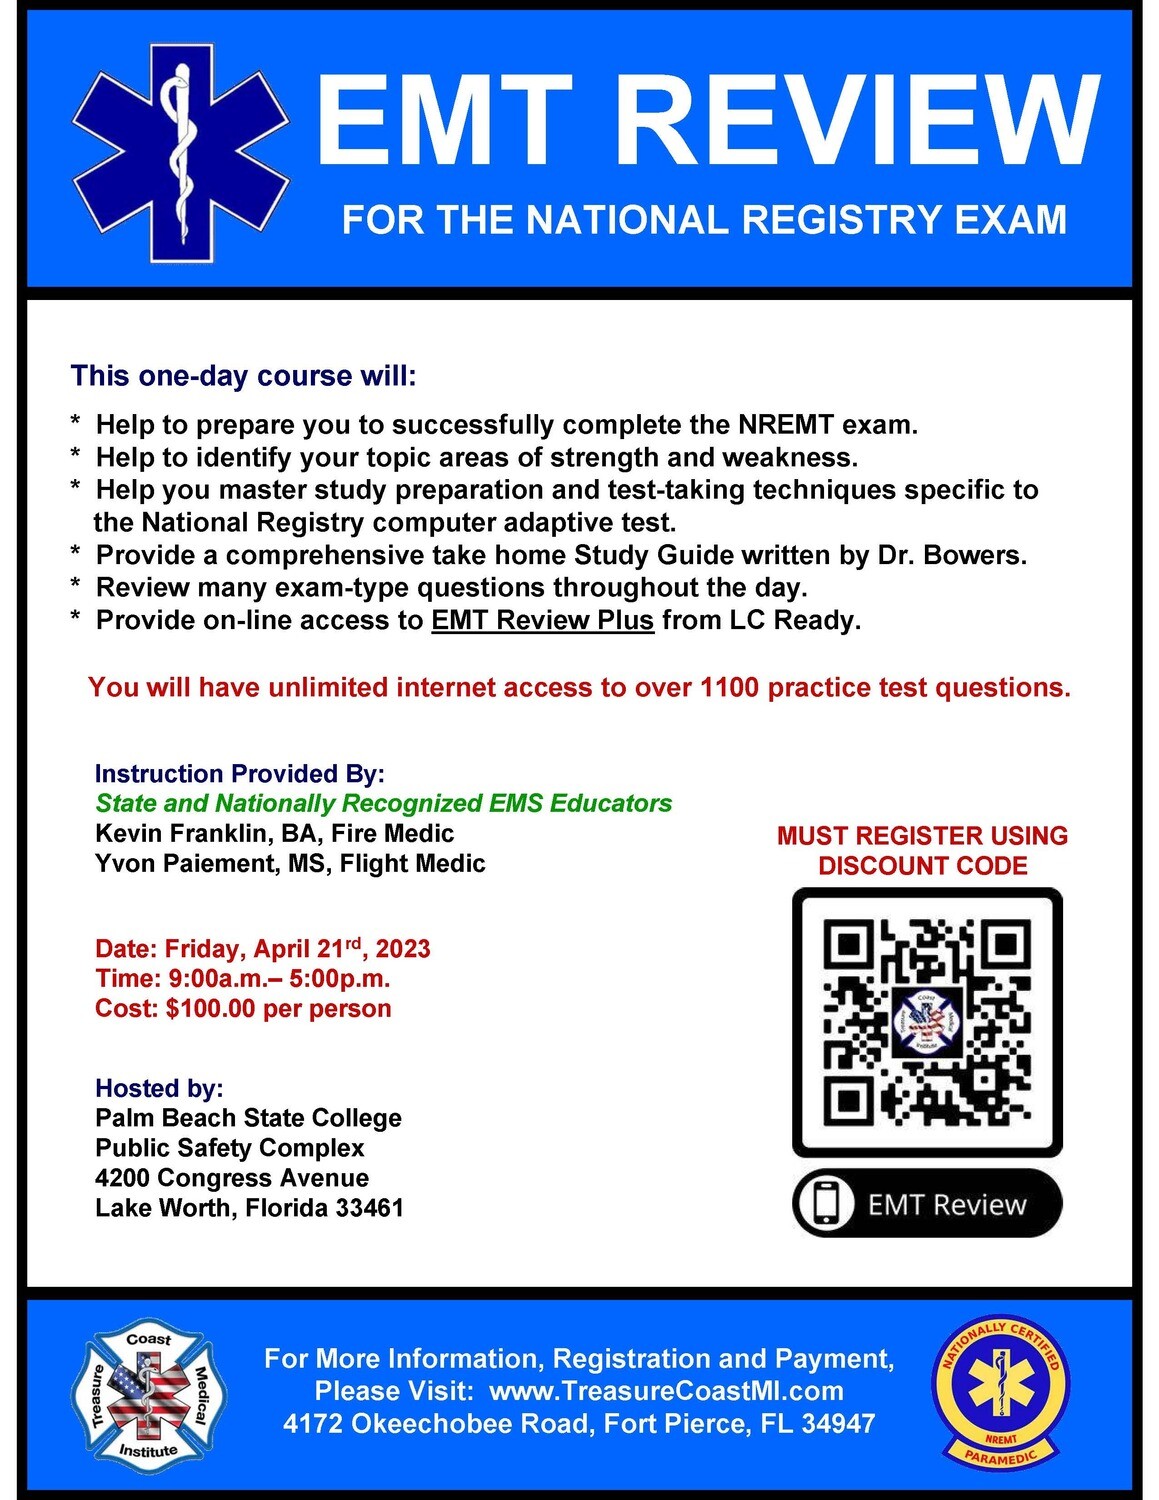 NREMT EMT Exam Review April 21st Lake Worth must use discount code to register